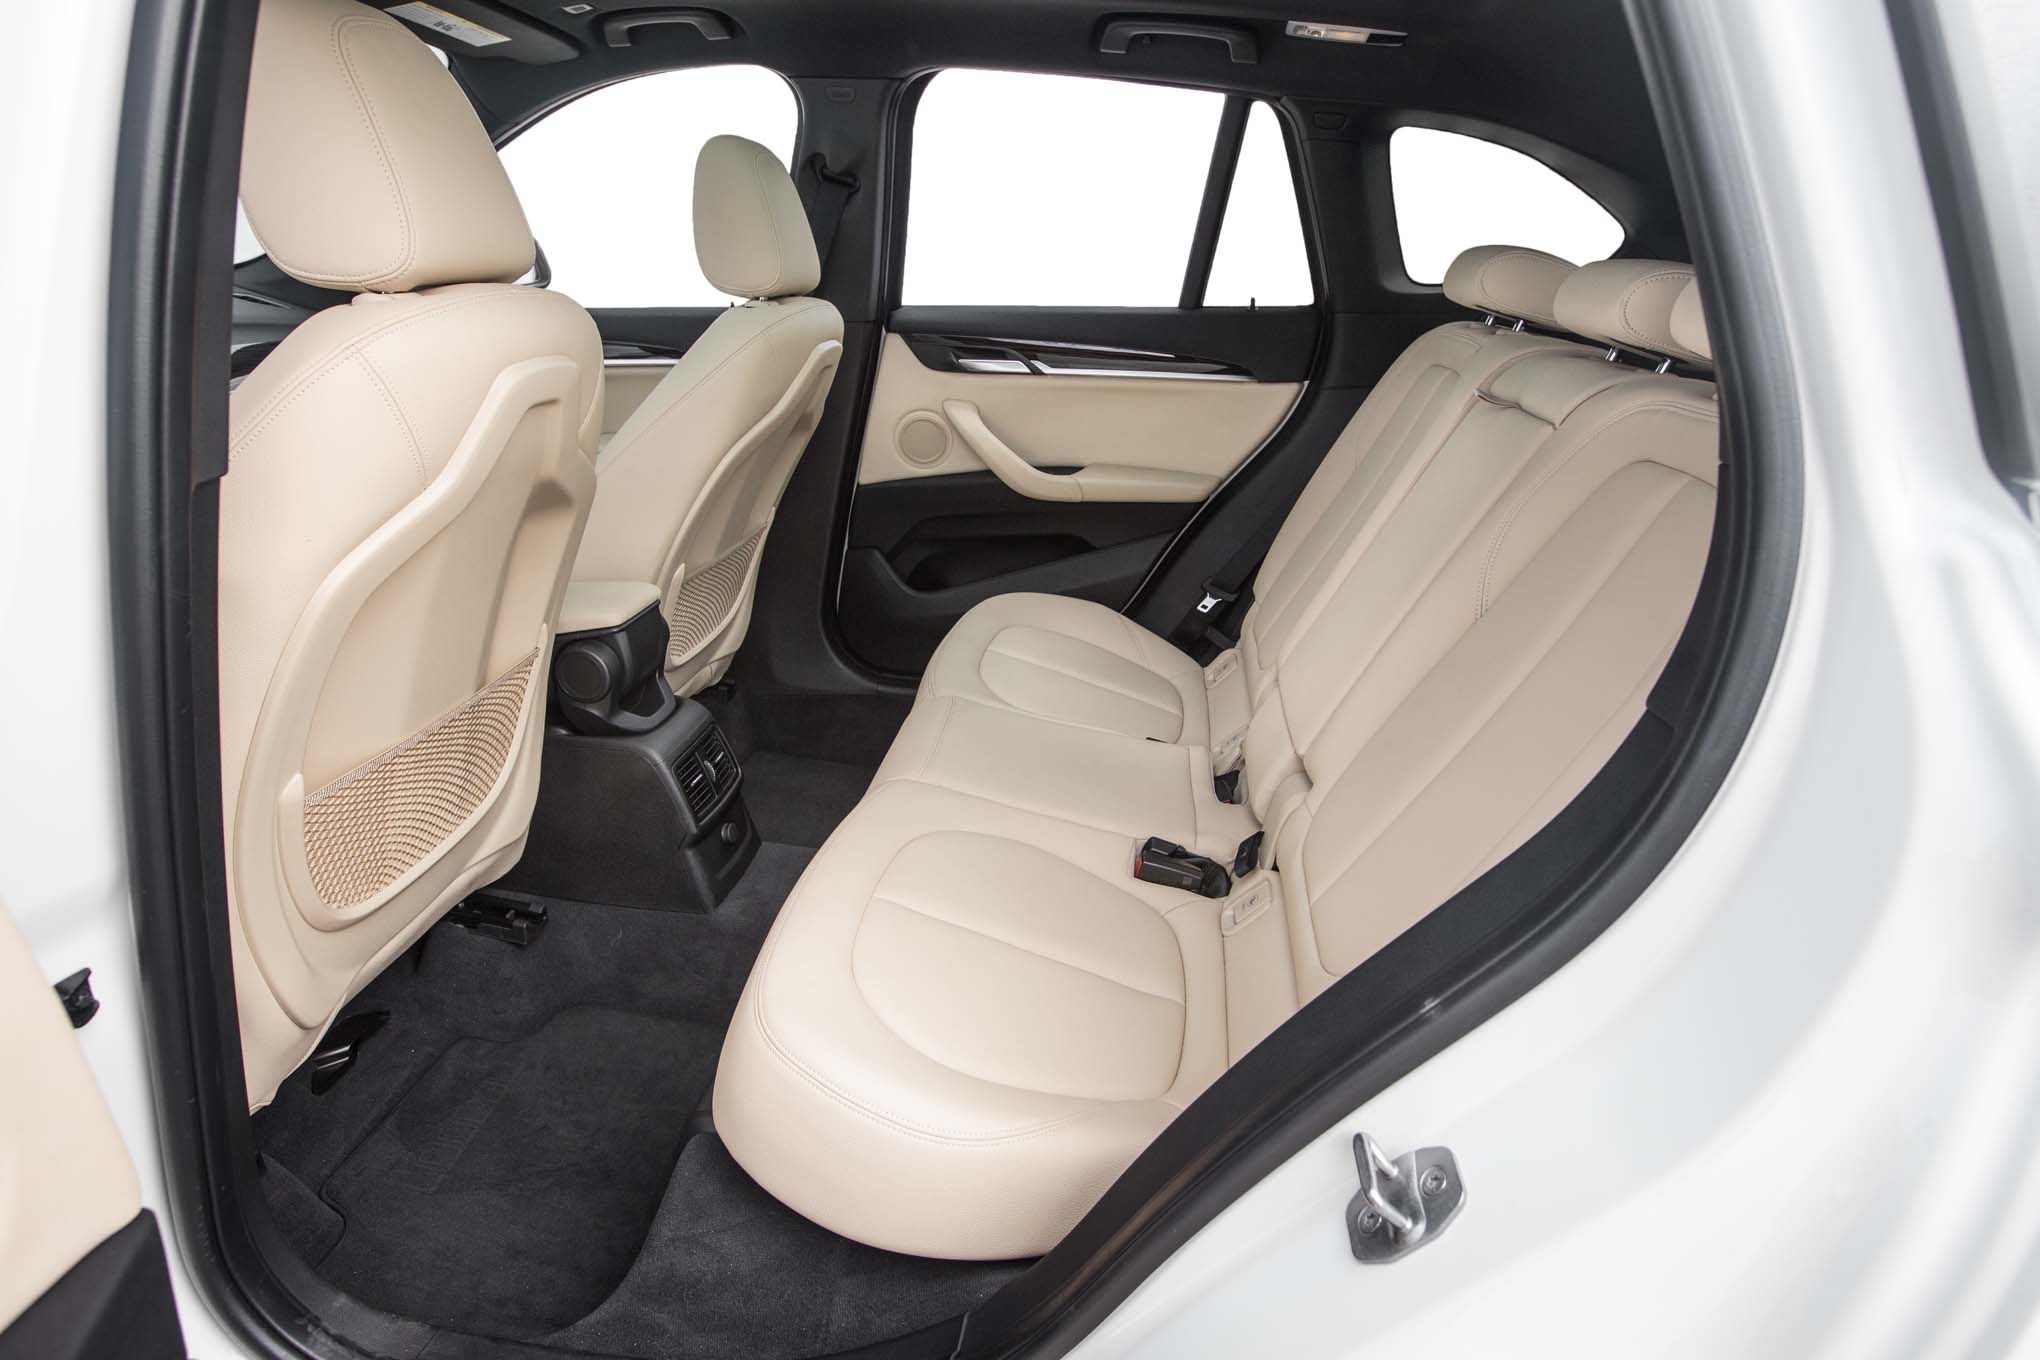 2017 Bmw X1 Xdrive28i Interior Seats Rear (View 14 of 23)